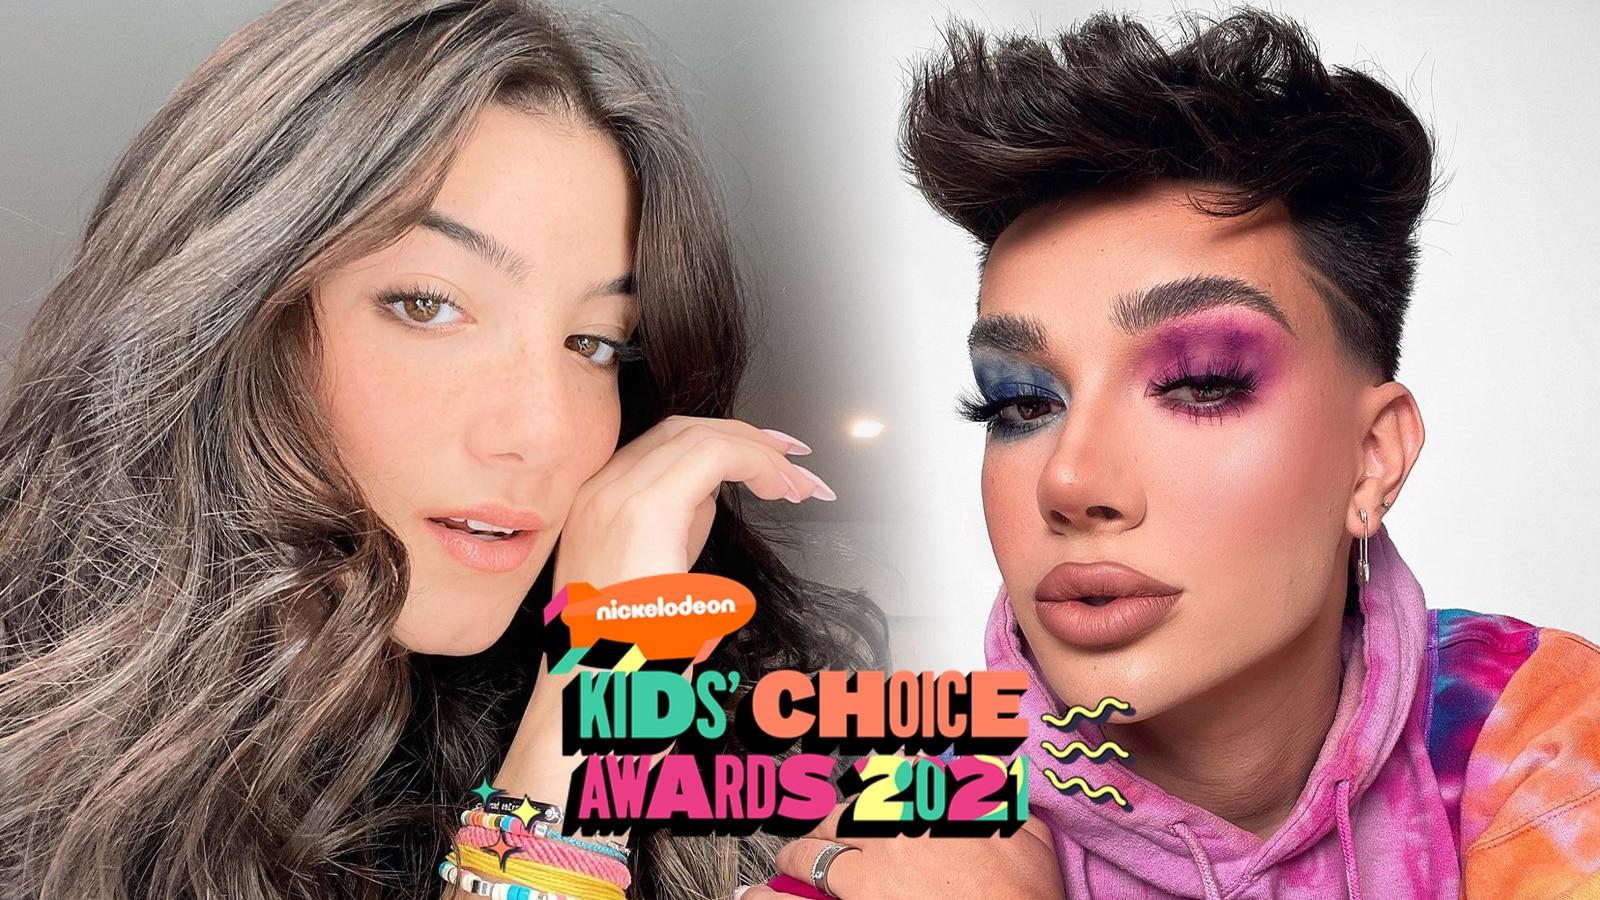 Charli D'Amelio just won big at the Kids' Choice Awards - GirlsLife